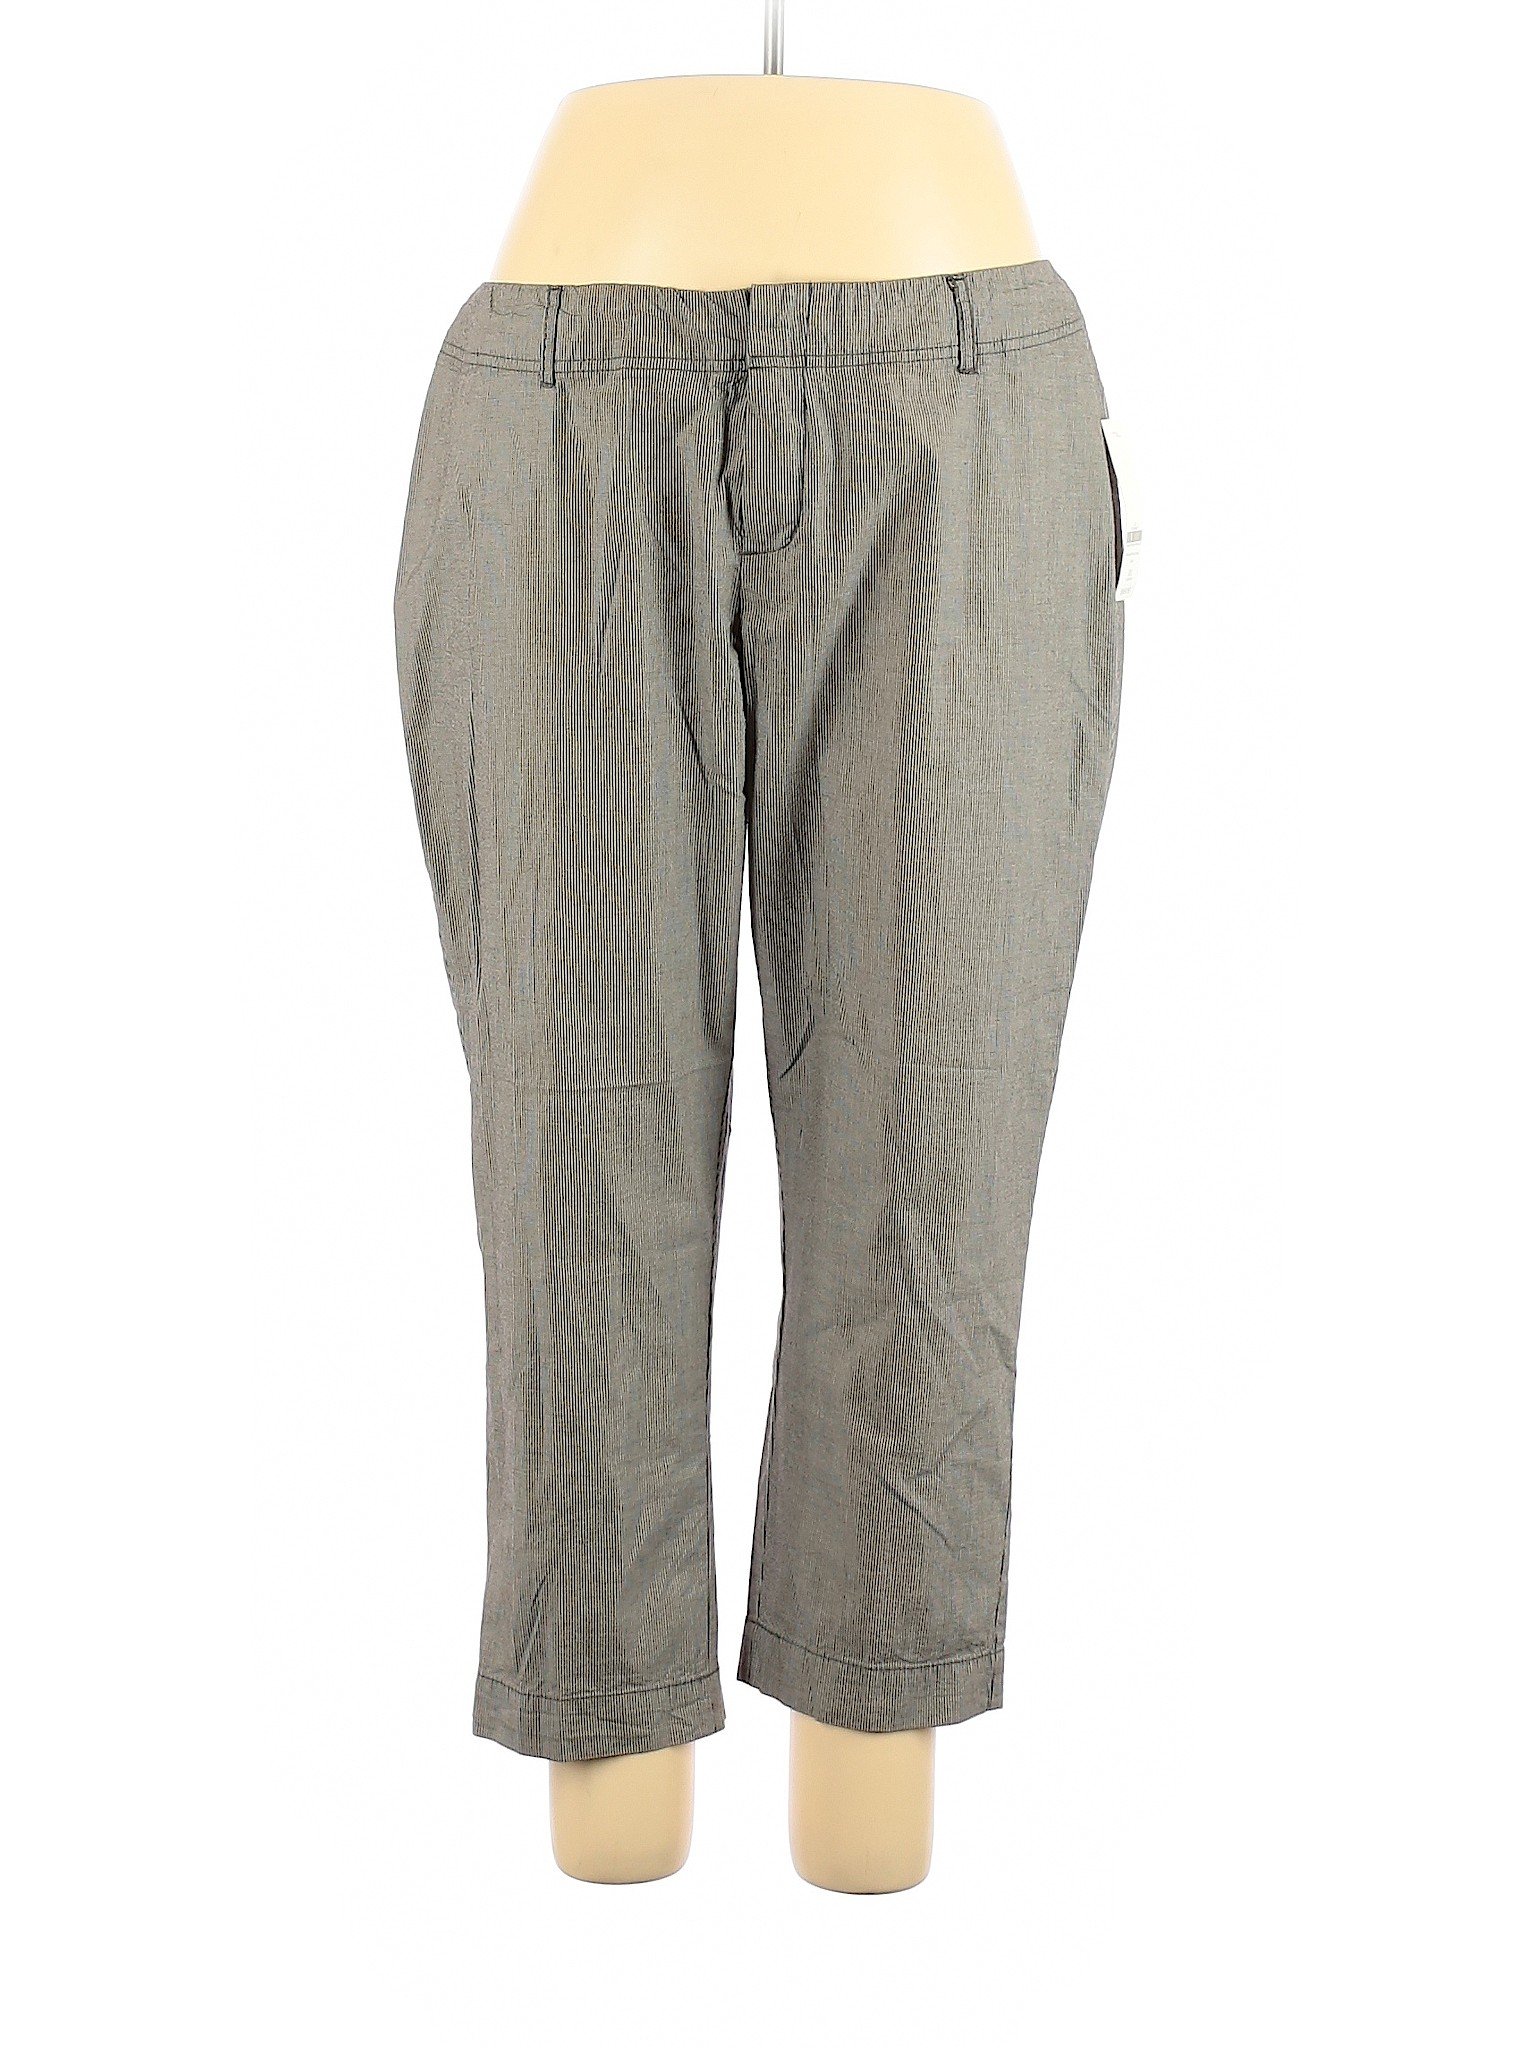 NWT Coldwater Creek Women Gray Casual Pants 20 Plus | eBay